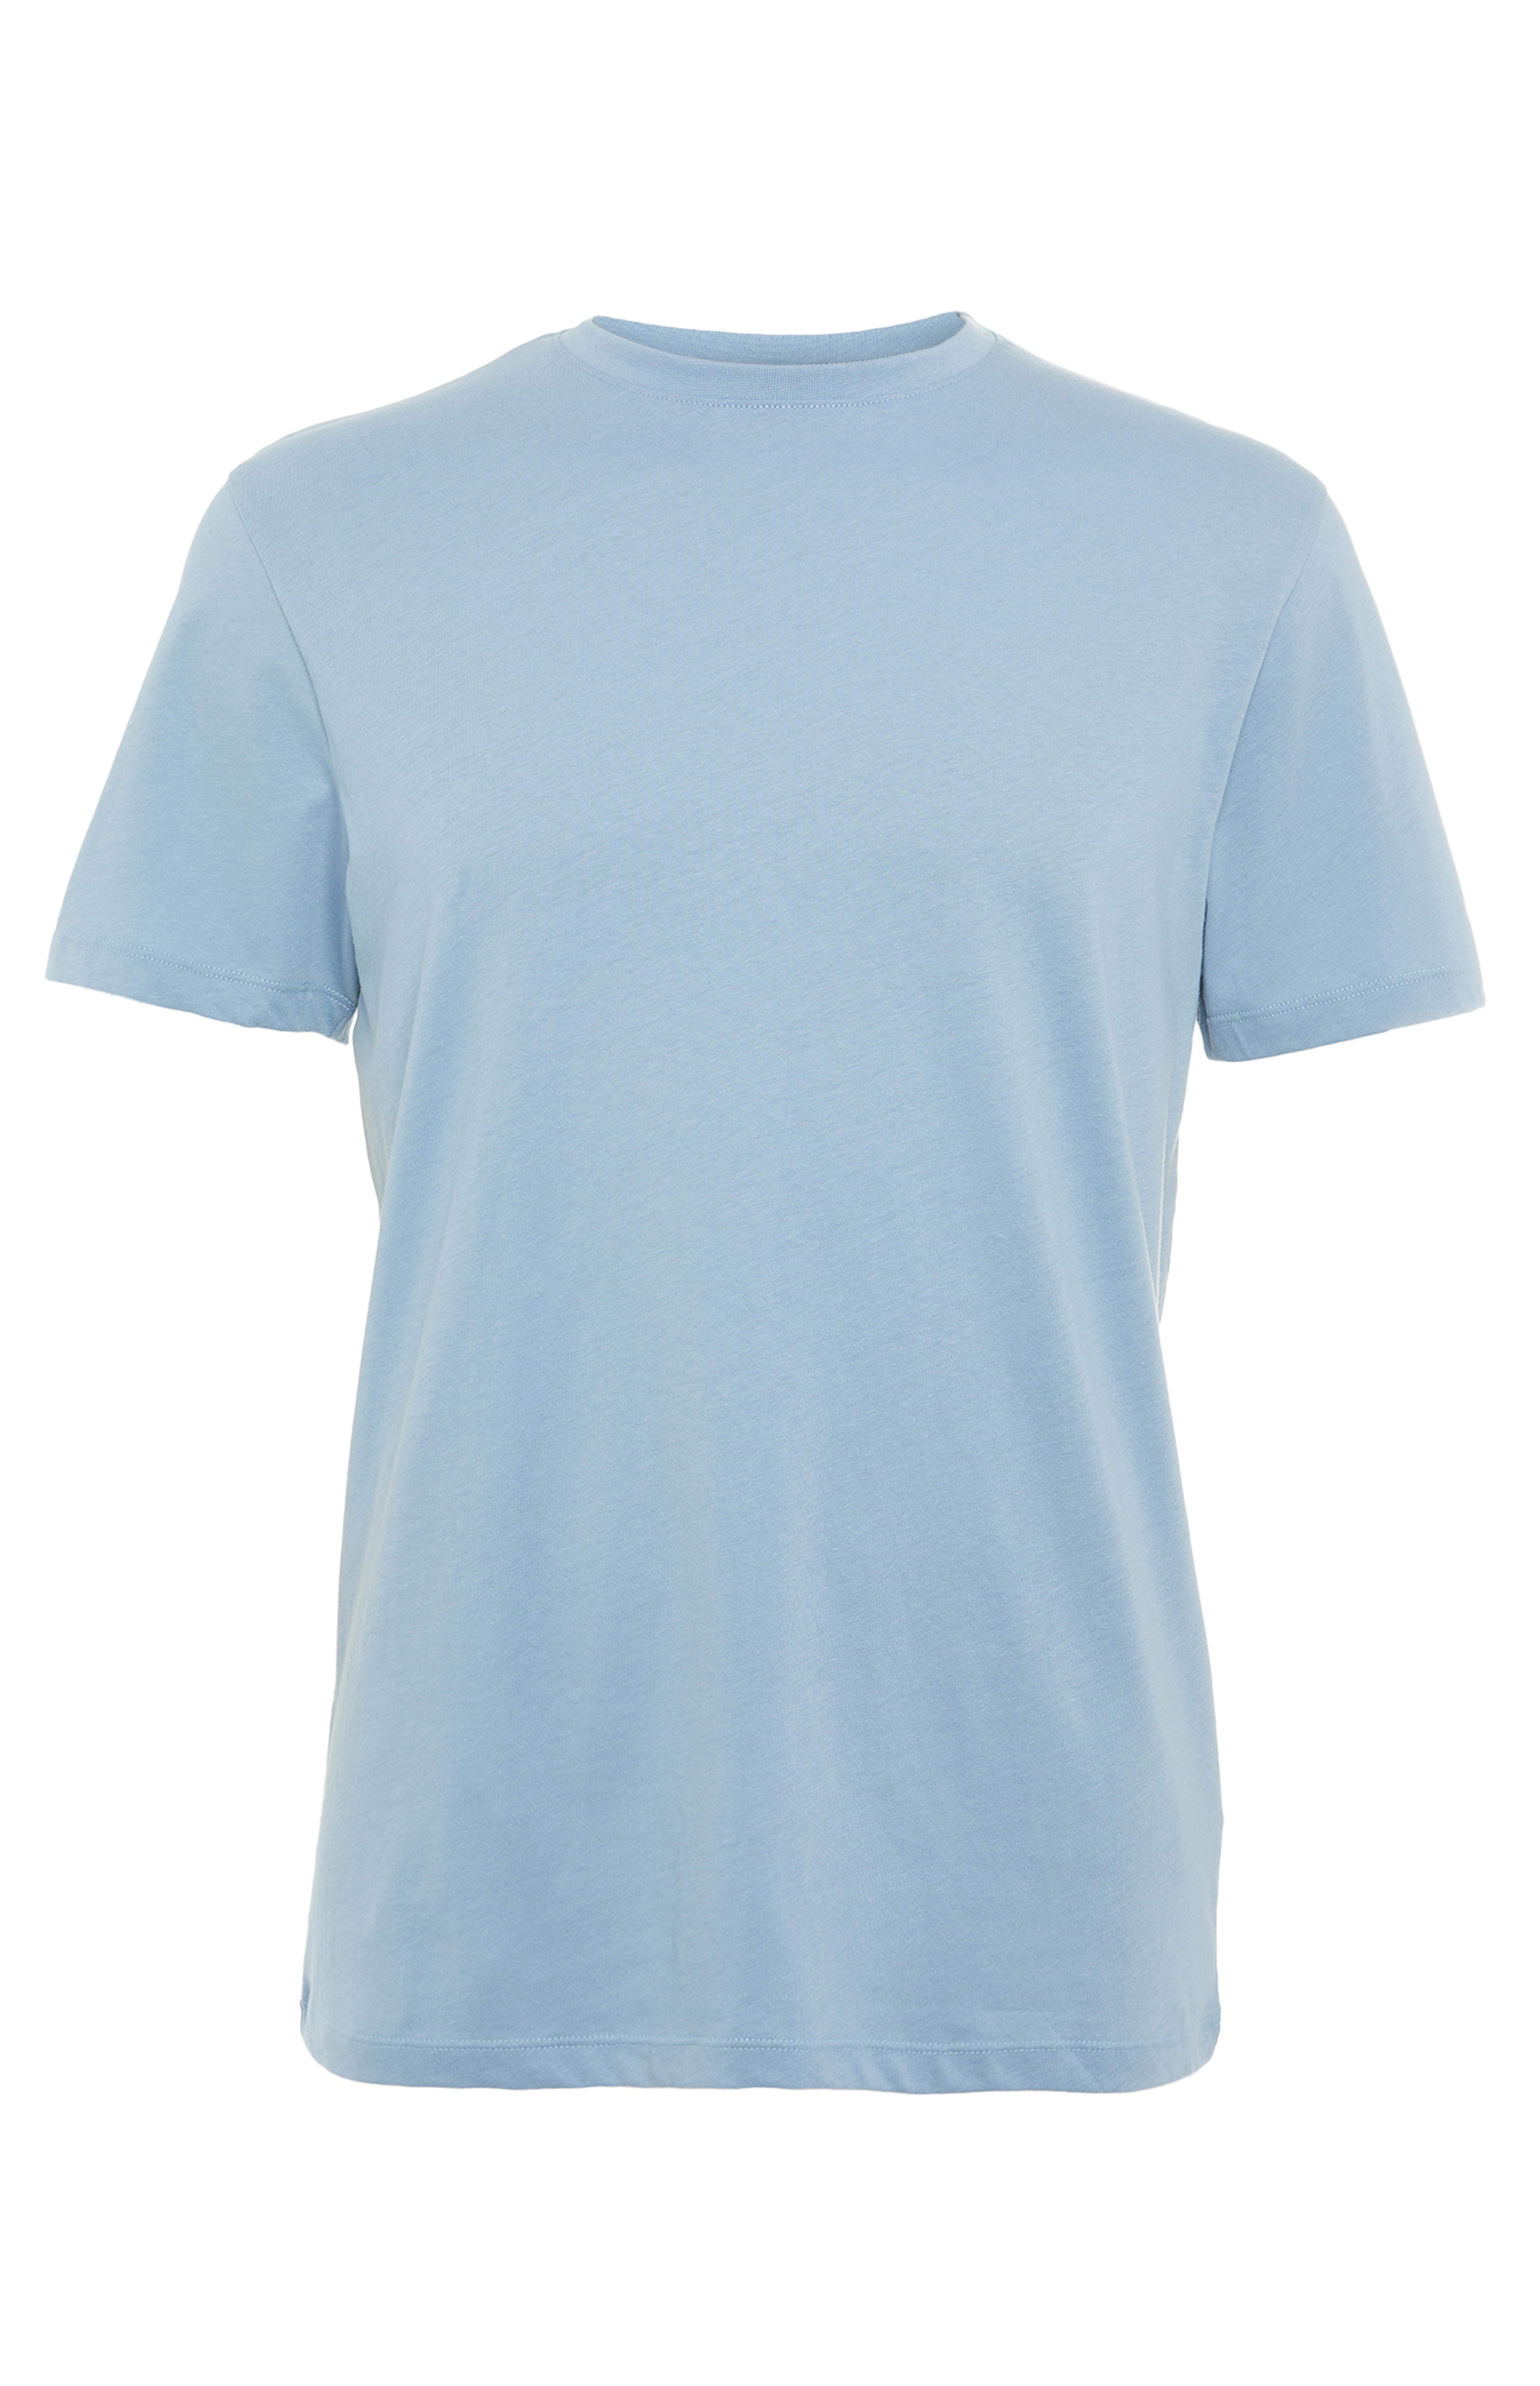 Light Blue Tailored Fit Crew Neck T-Shirt | Men's Tees | Men's T-shirts ...